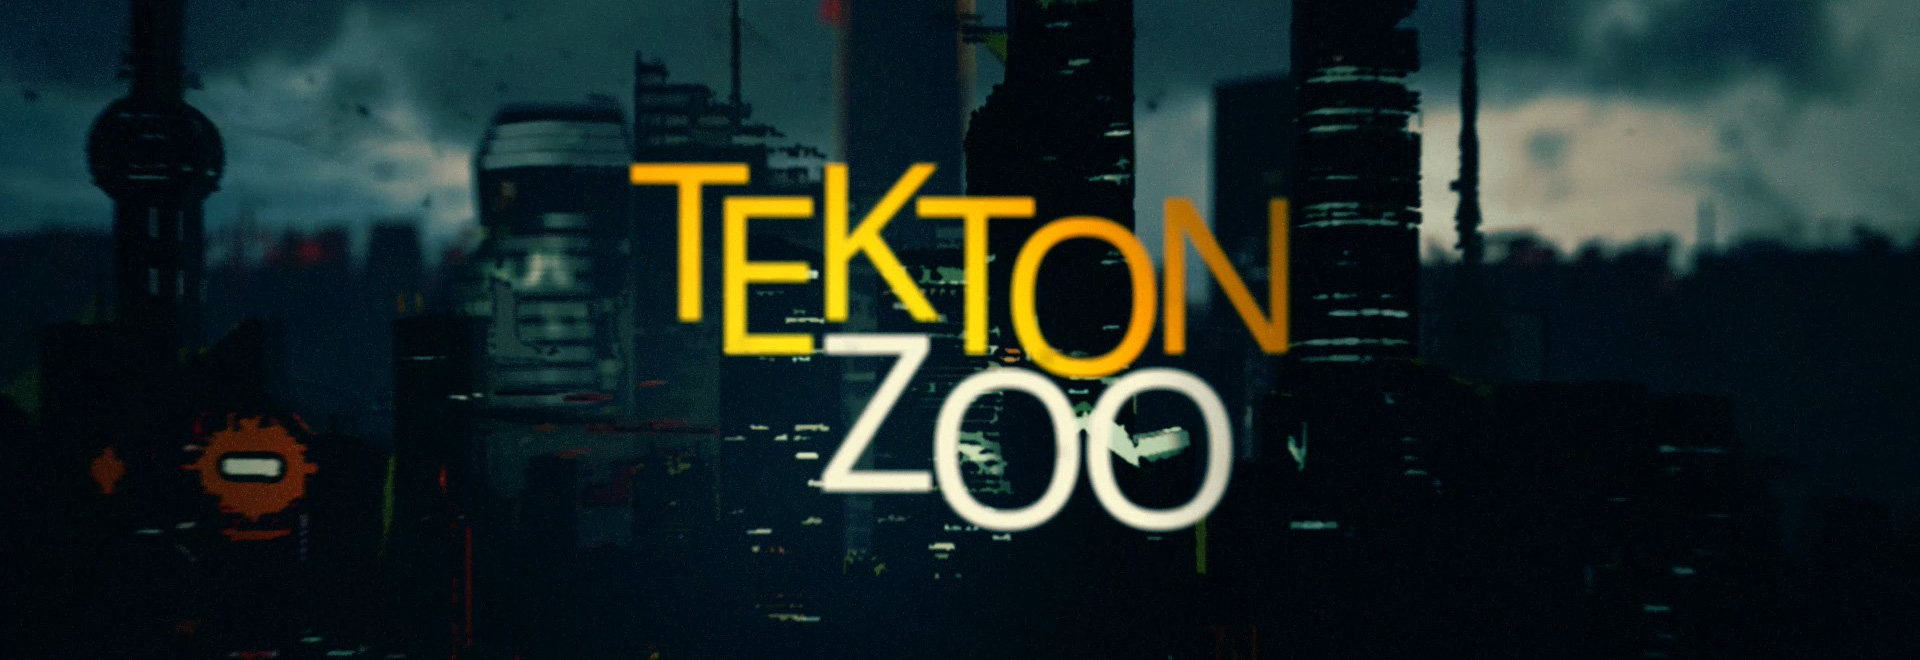 Tekton-Zoo-Logo4.jpg